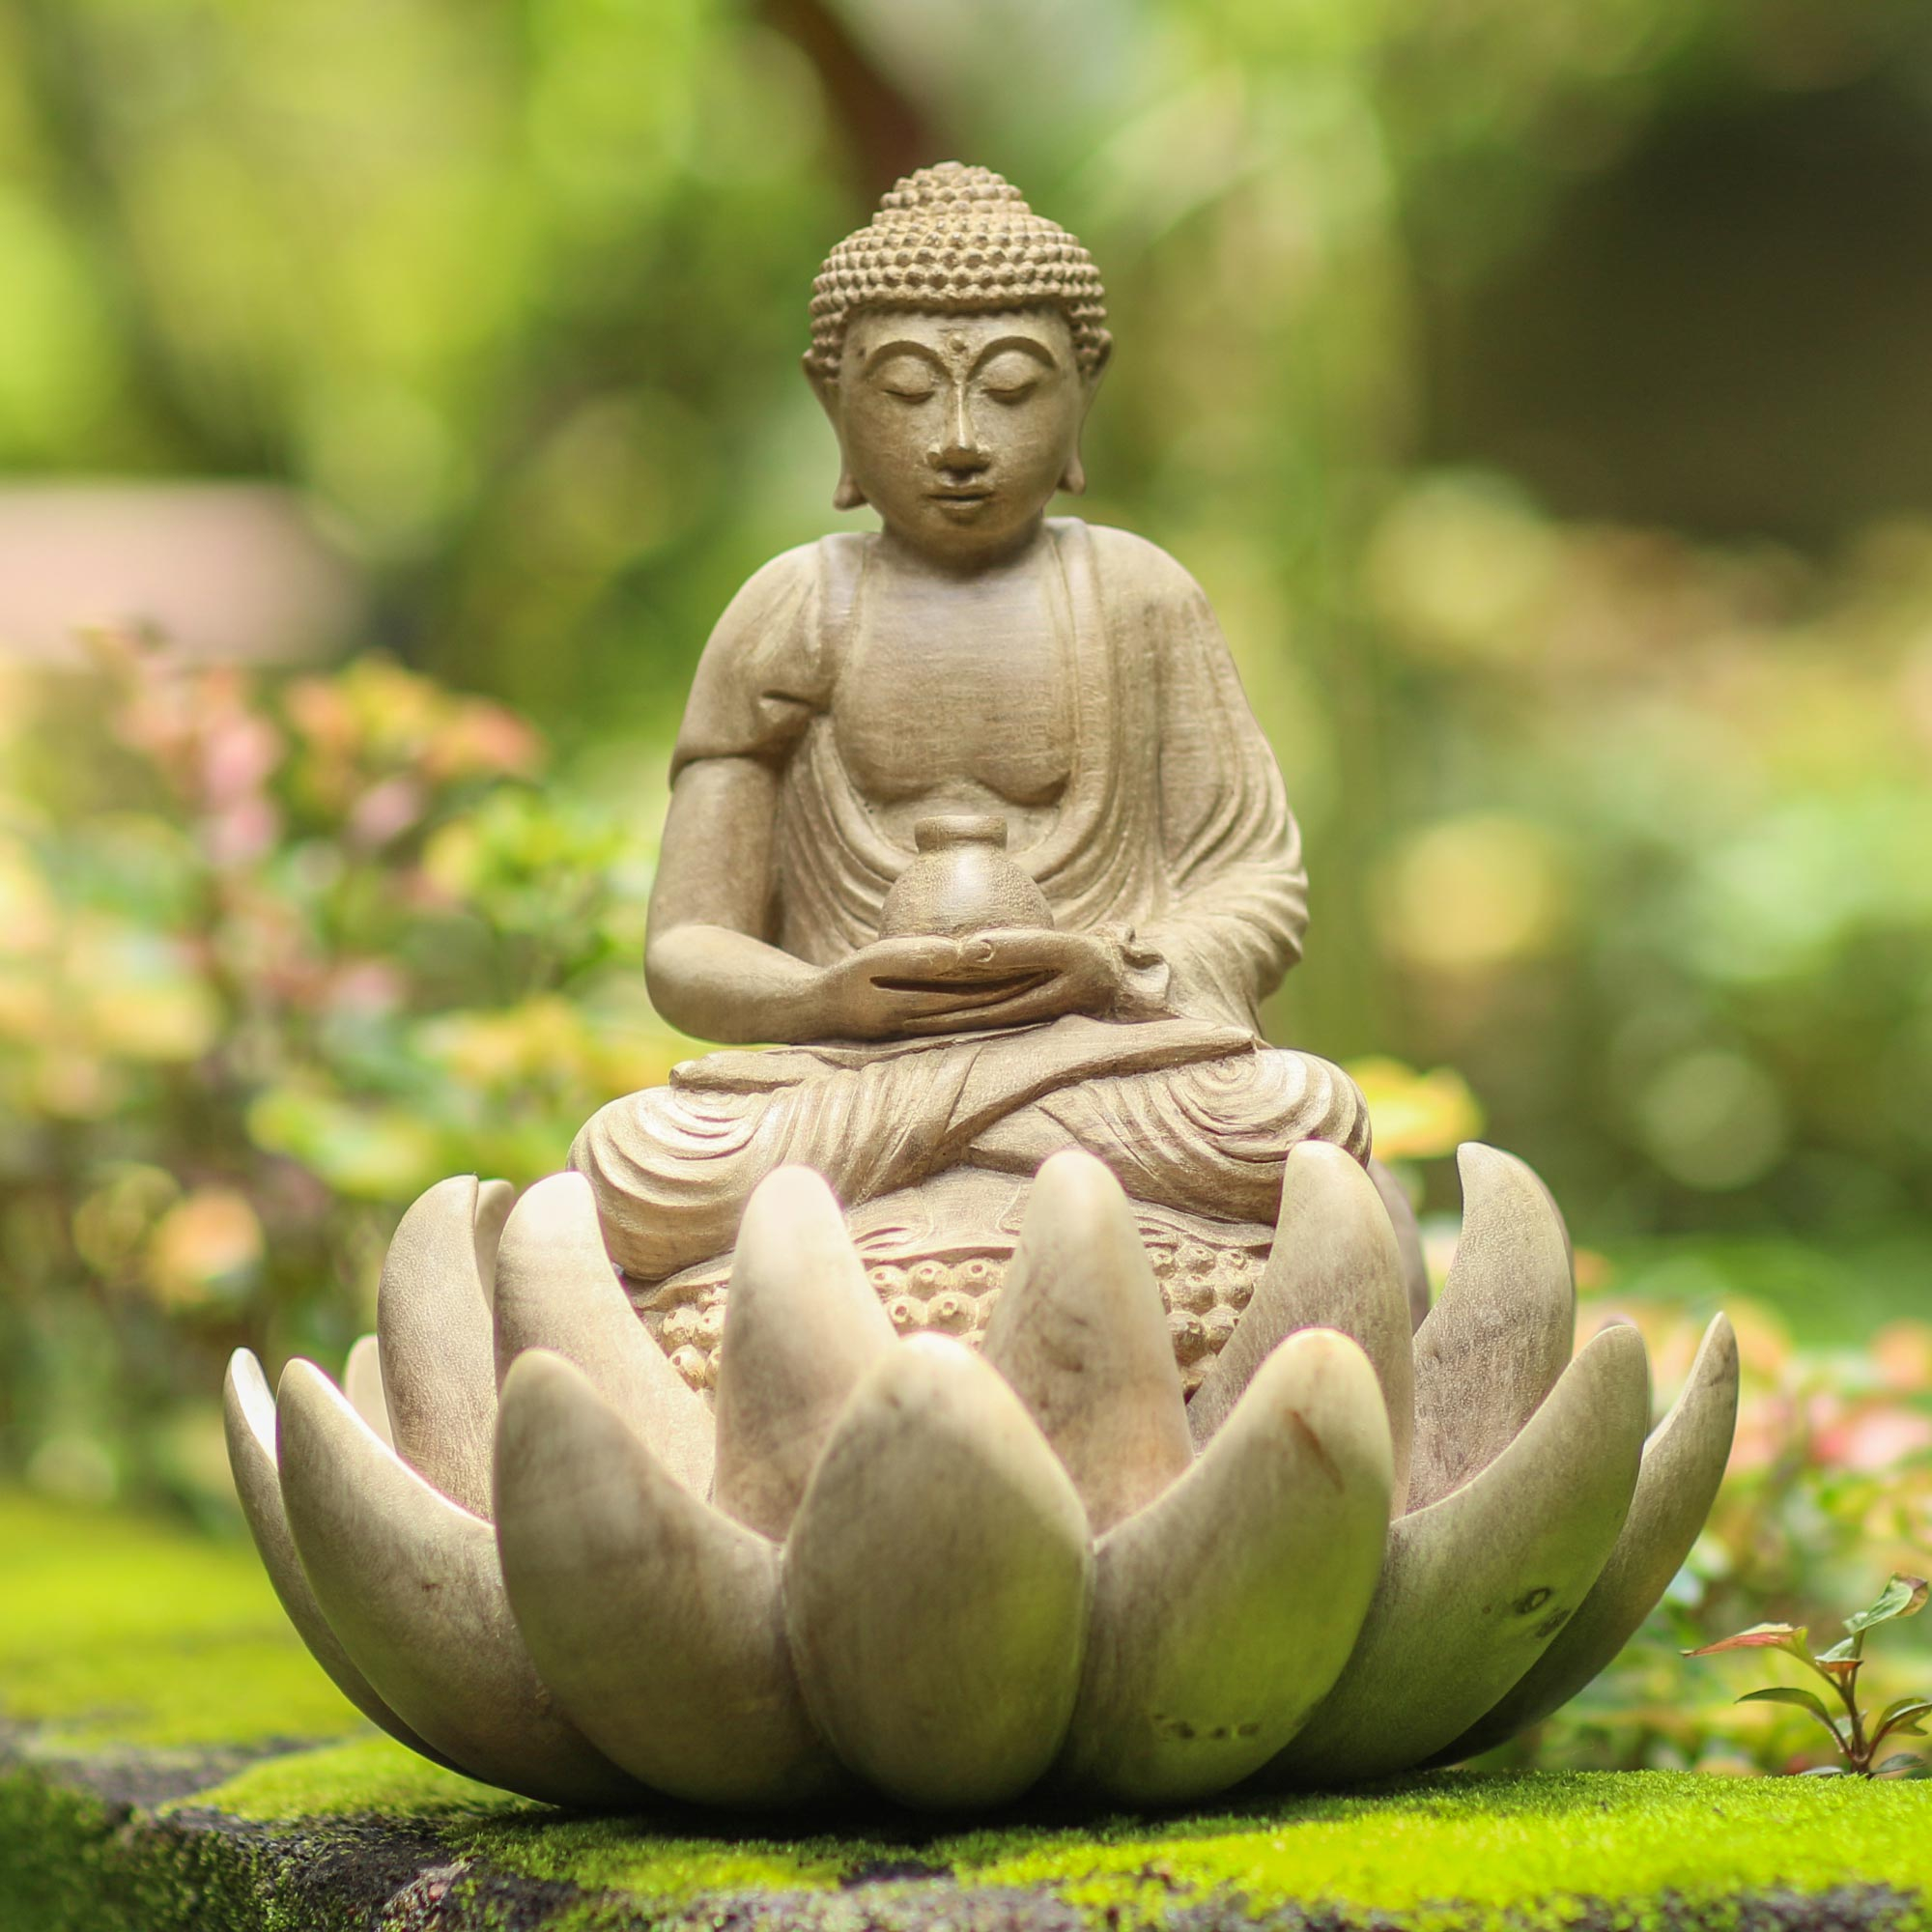 Hibiscus Wood Buddha and Lotus Flower Sculpture - Dhyan Mudra